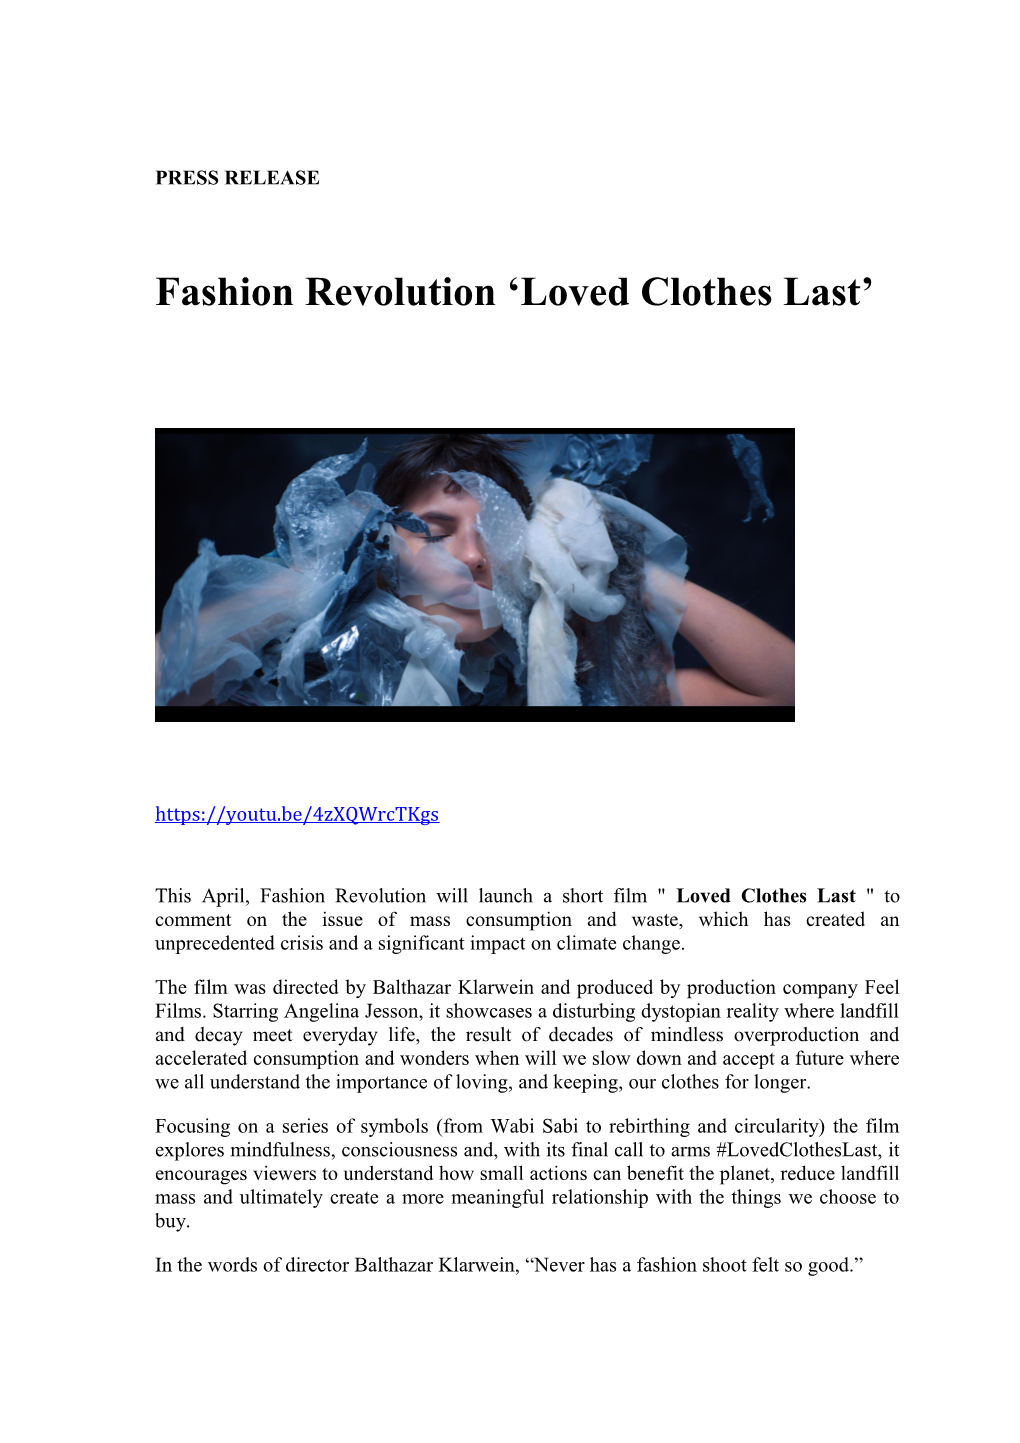 Fashion Revolution Loved Clothes Last